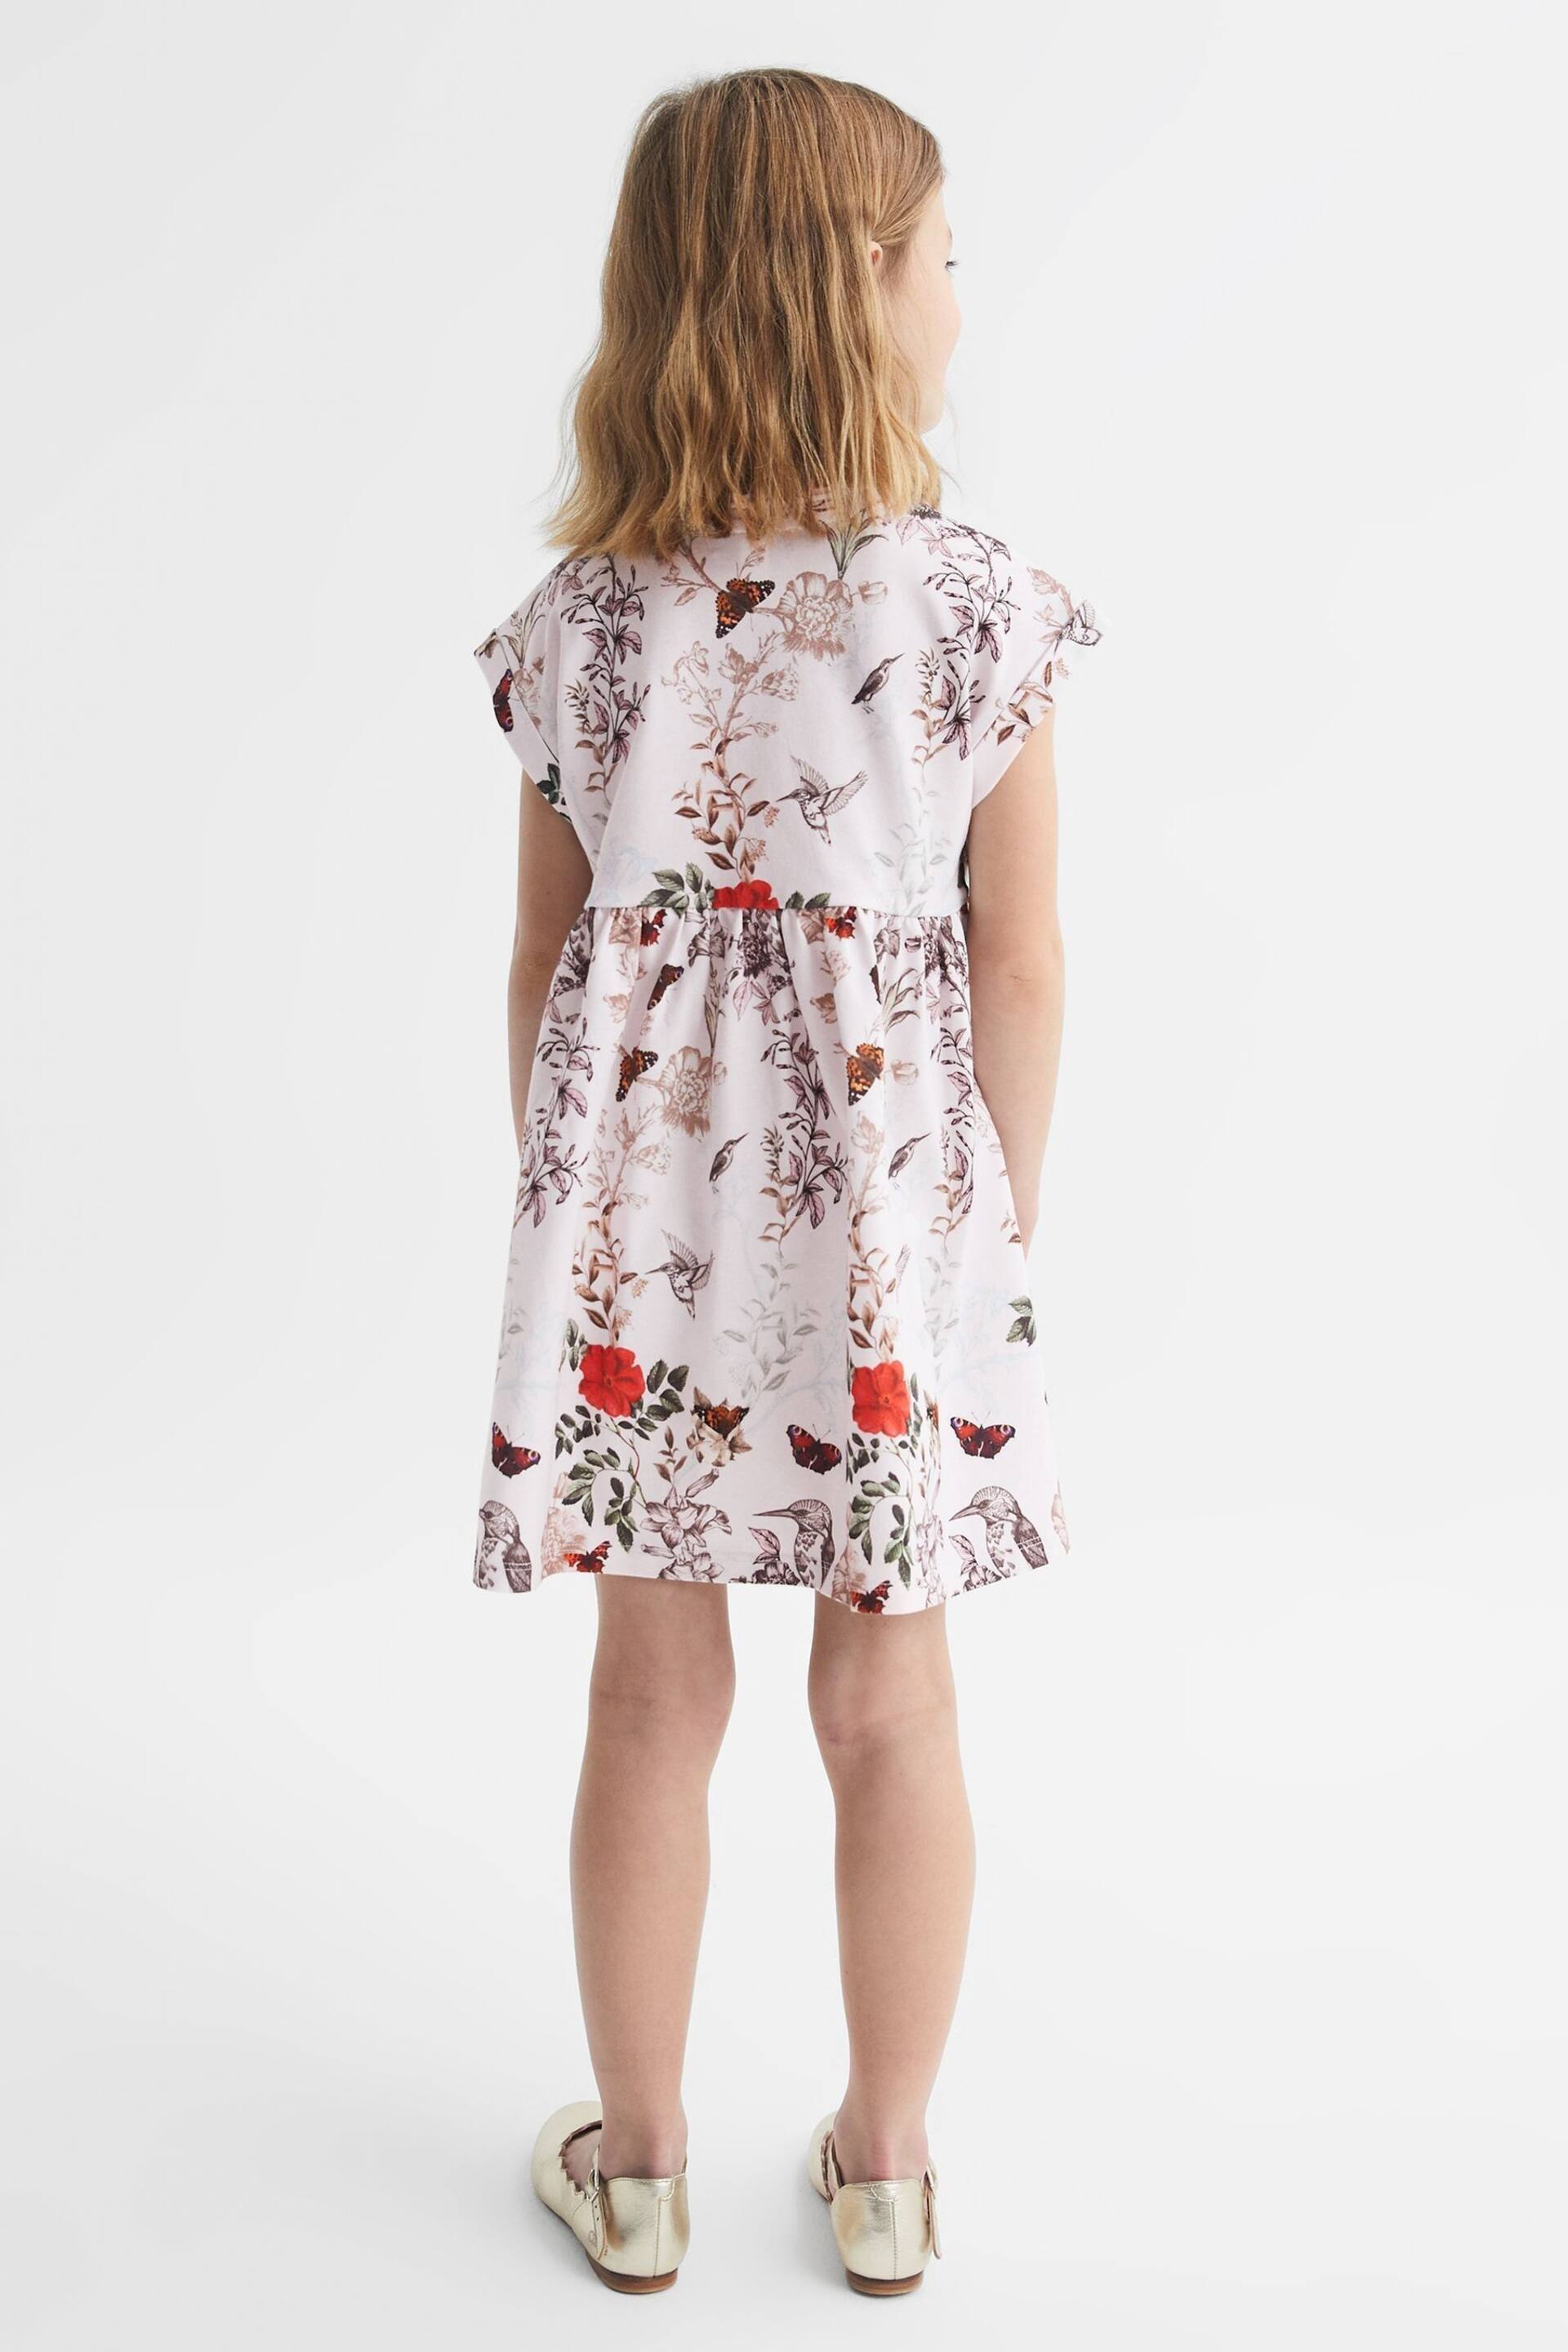 Reiss Pale Pink Dahlia Junior Floral Print Jersey Dress - Image 5 of 6